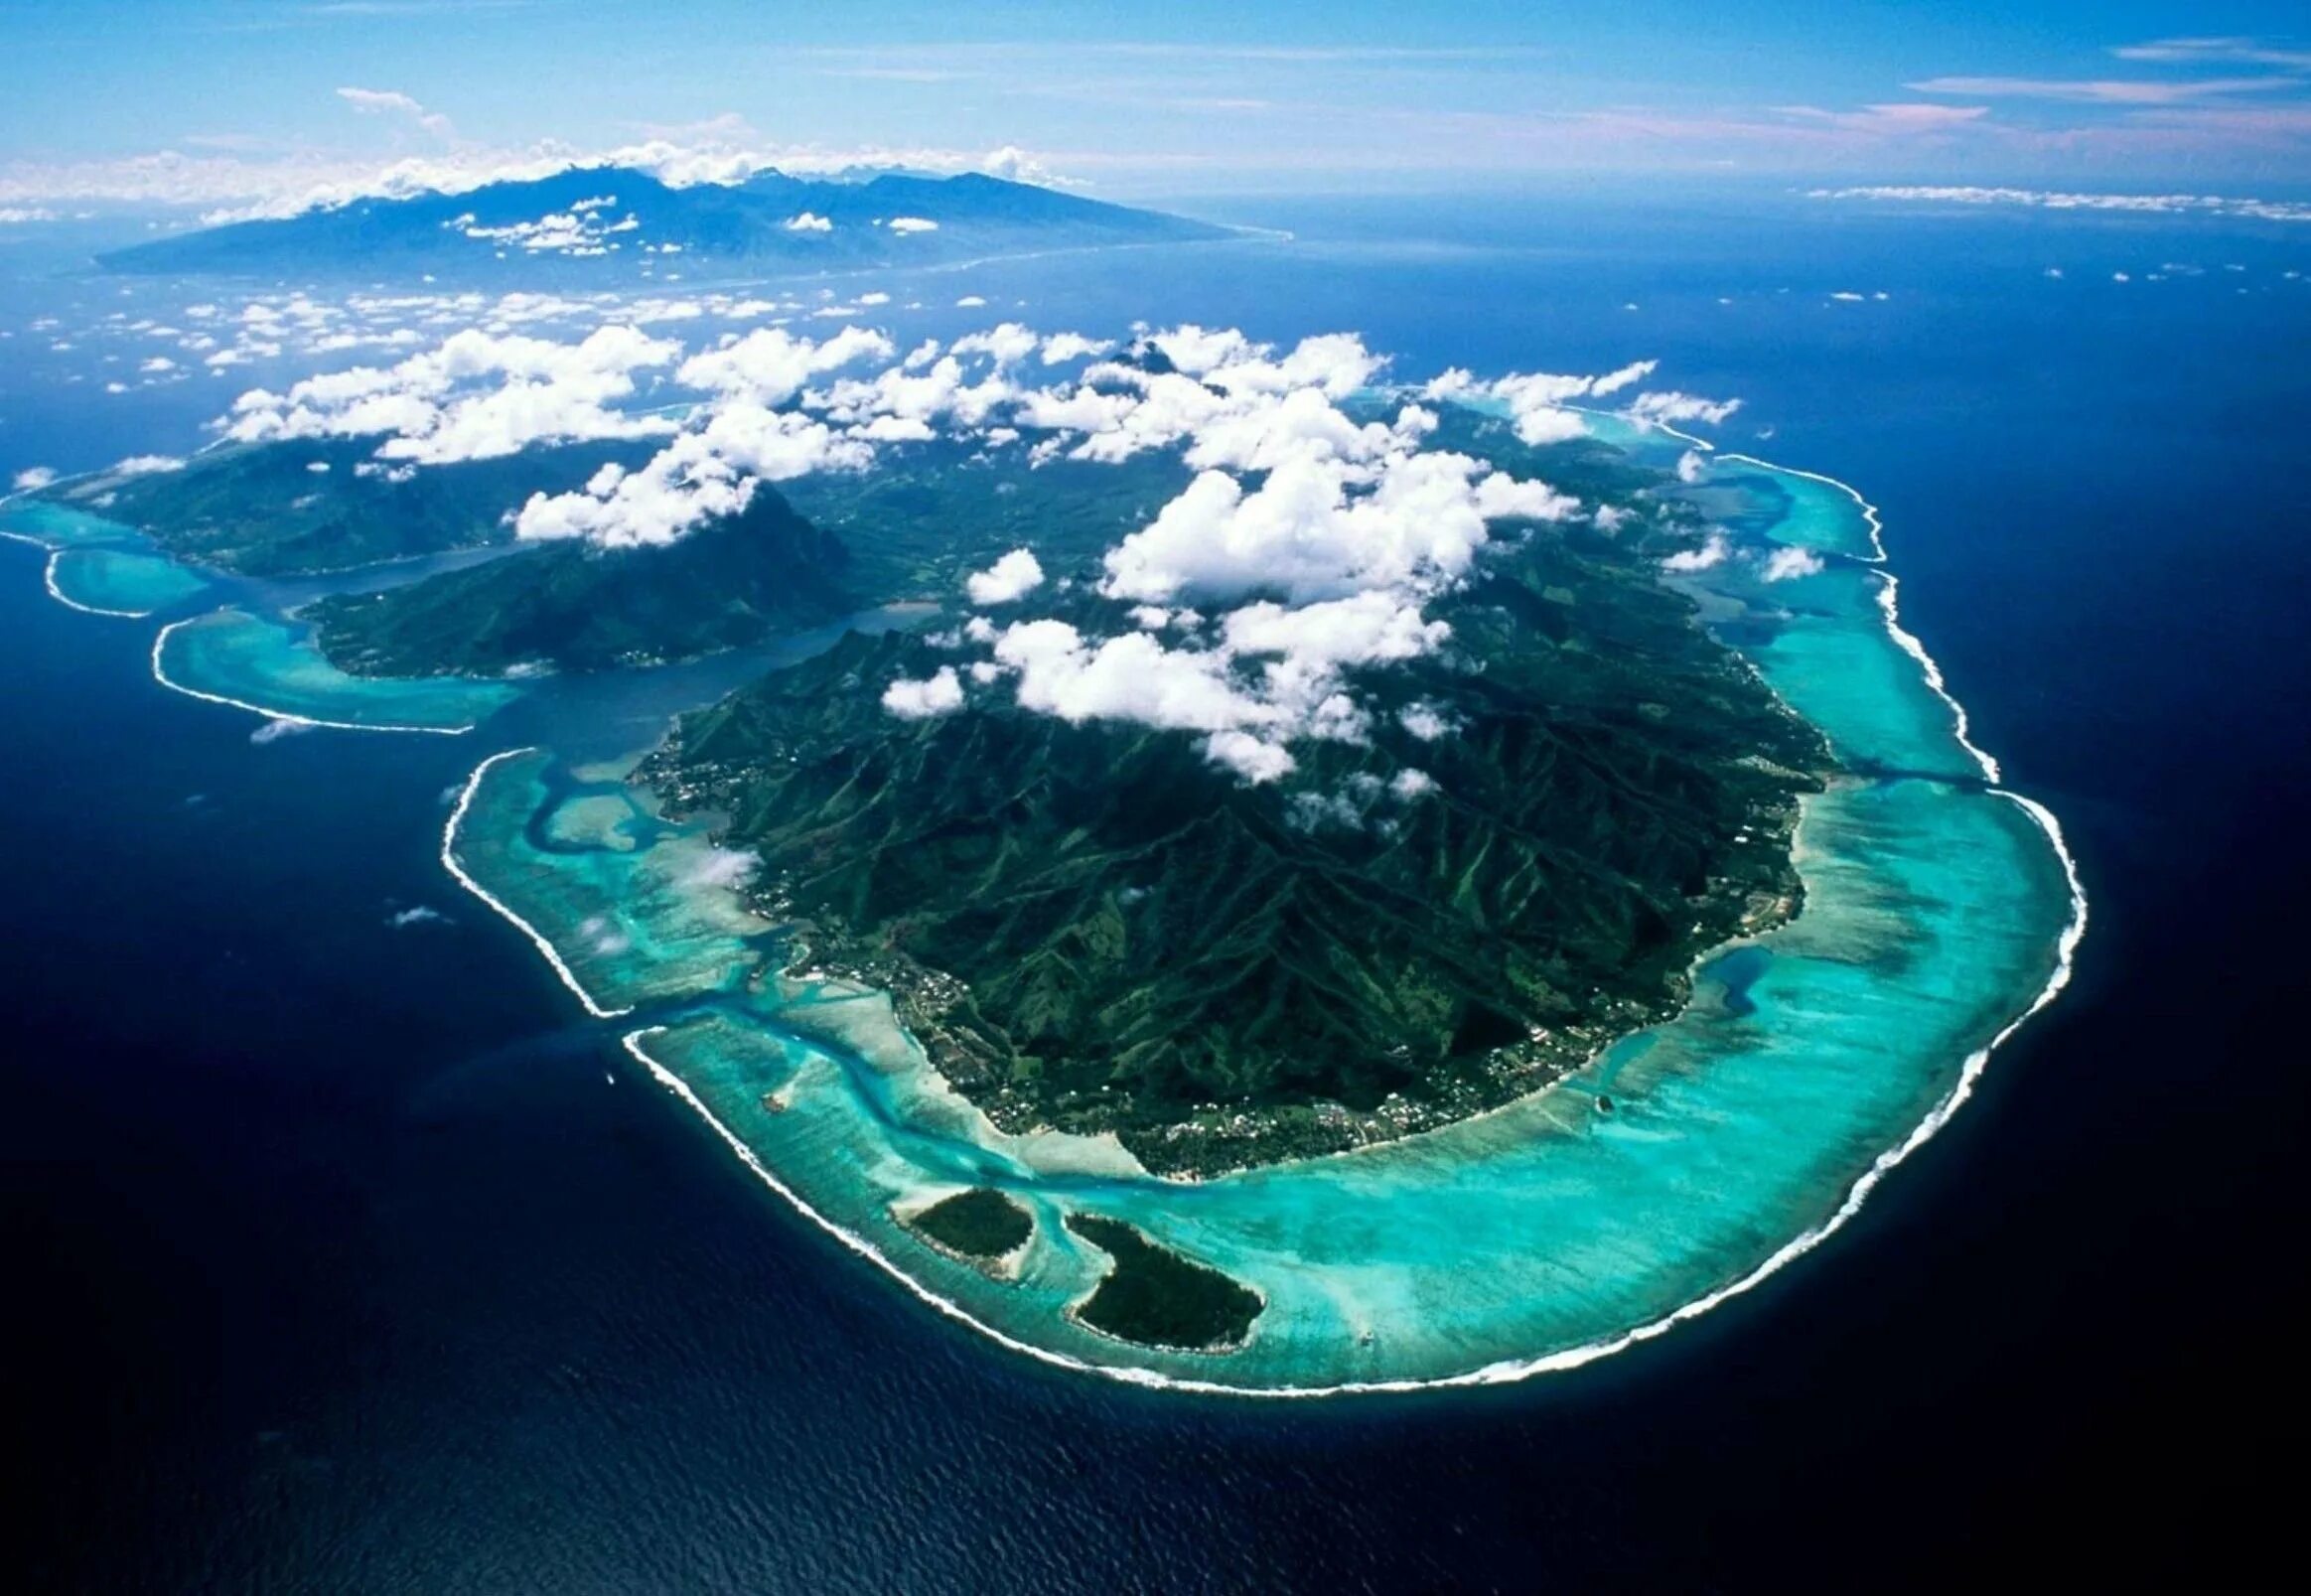 Континент атлантического океана. Tahiti французская Полинезия. Муреа Таити. Таити остров архипелаг. Остров Марито французская Полинезия.